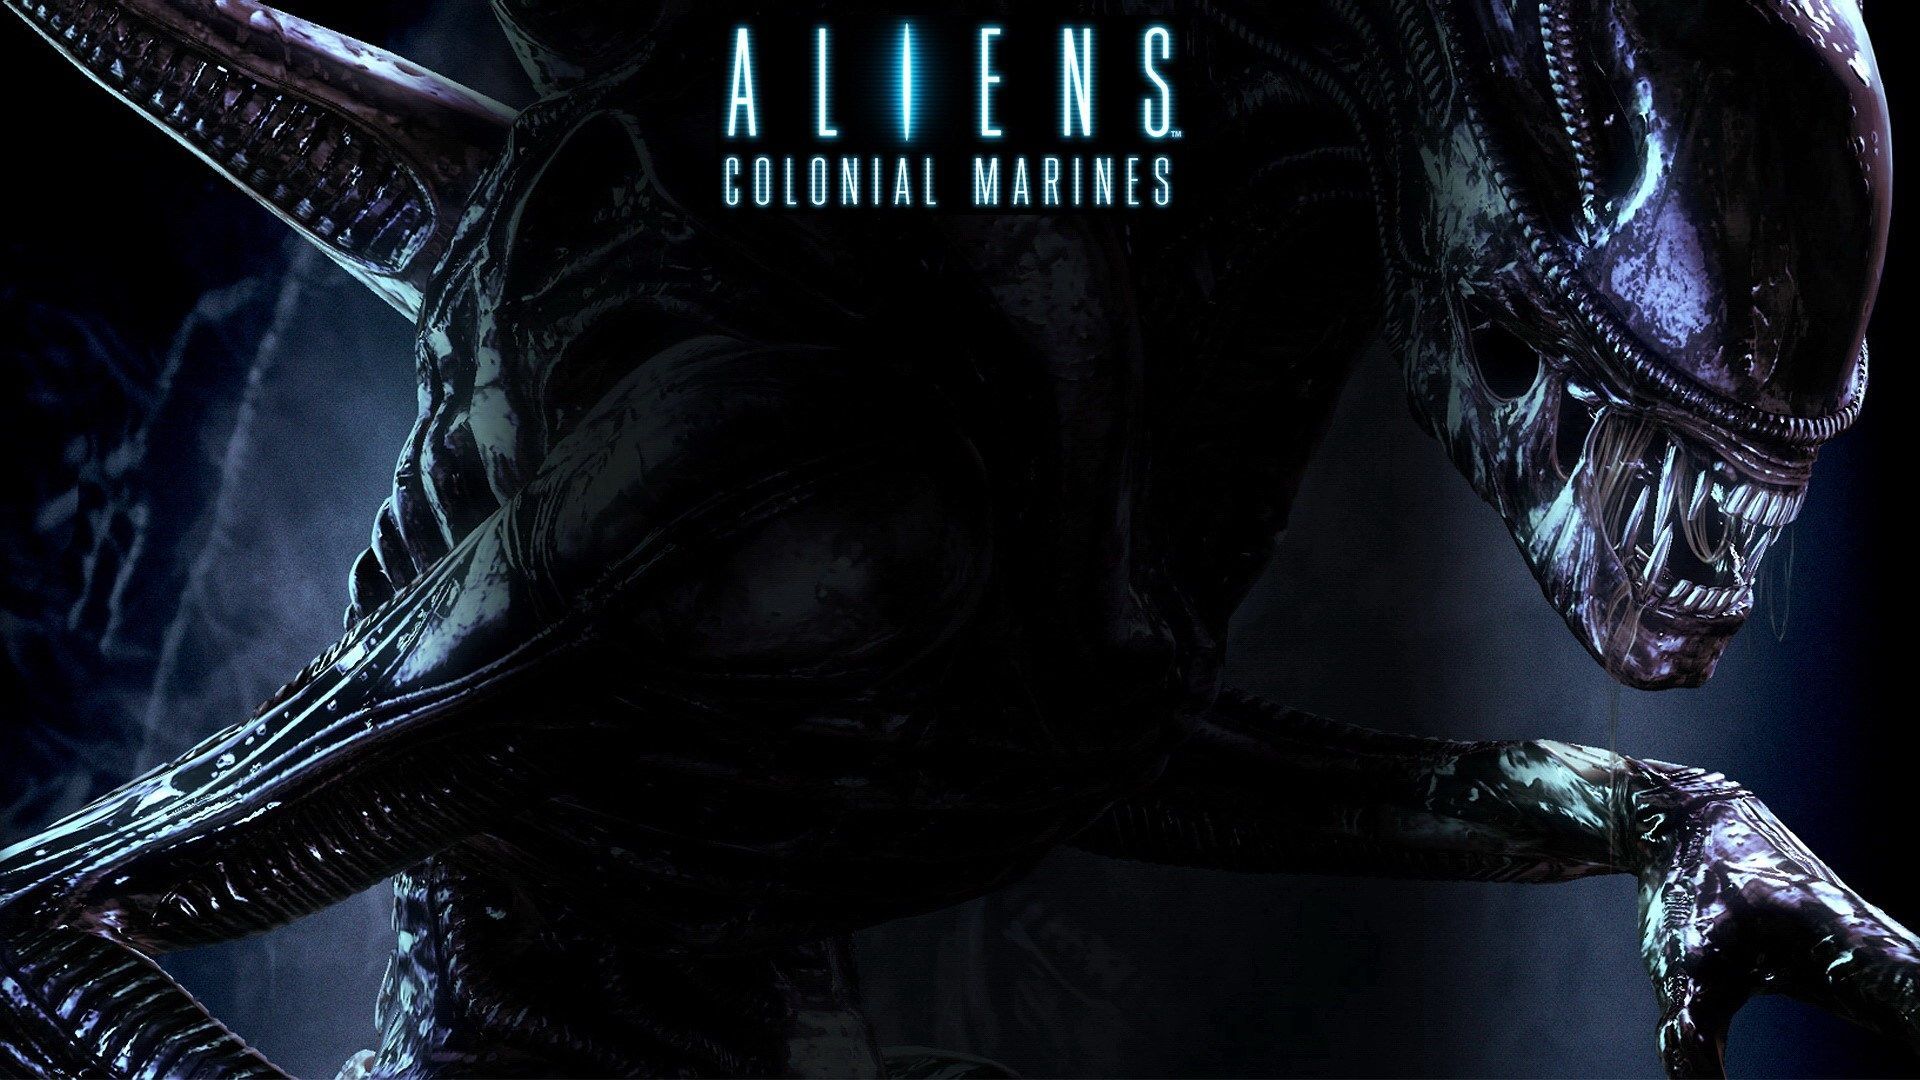 wallpaper desktop aliens colonial marines, 1920x1080 390 kB